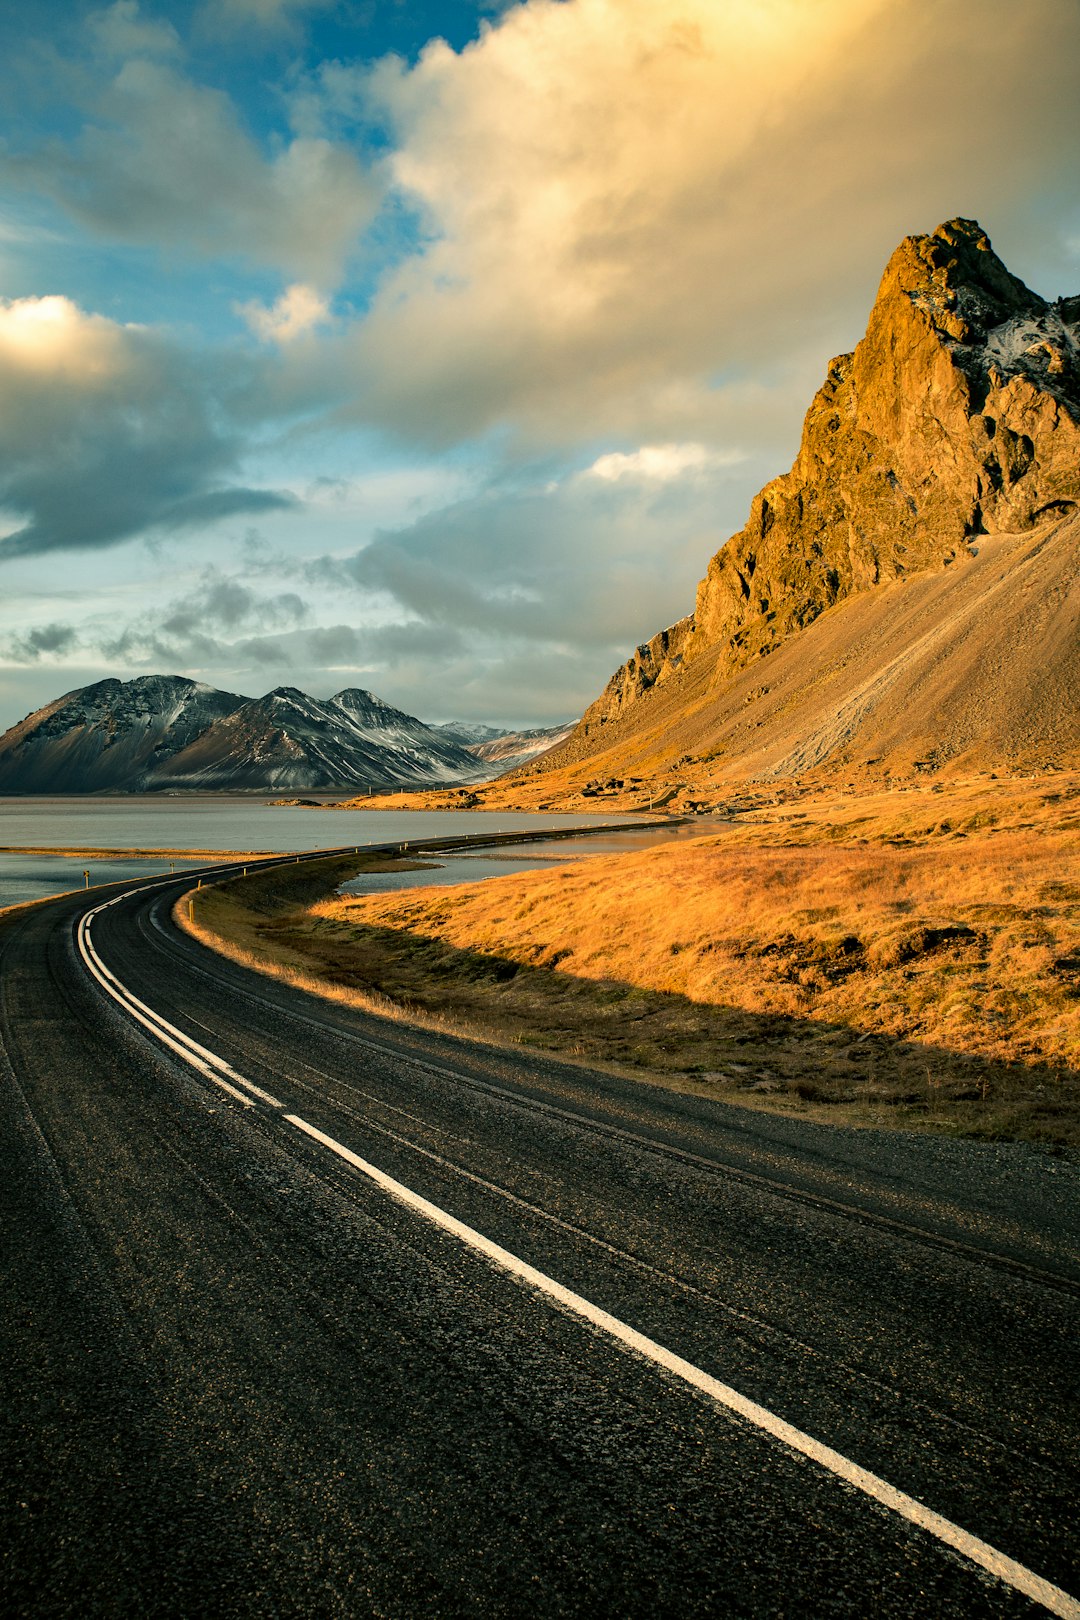 travelers stories about Road trip in Þjóðvegur, Iceland